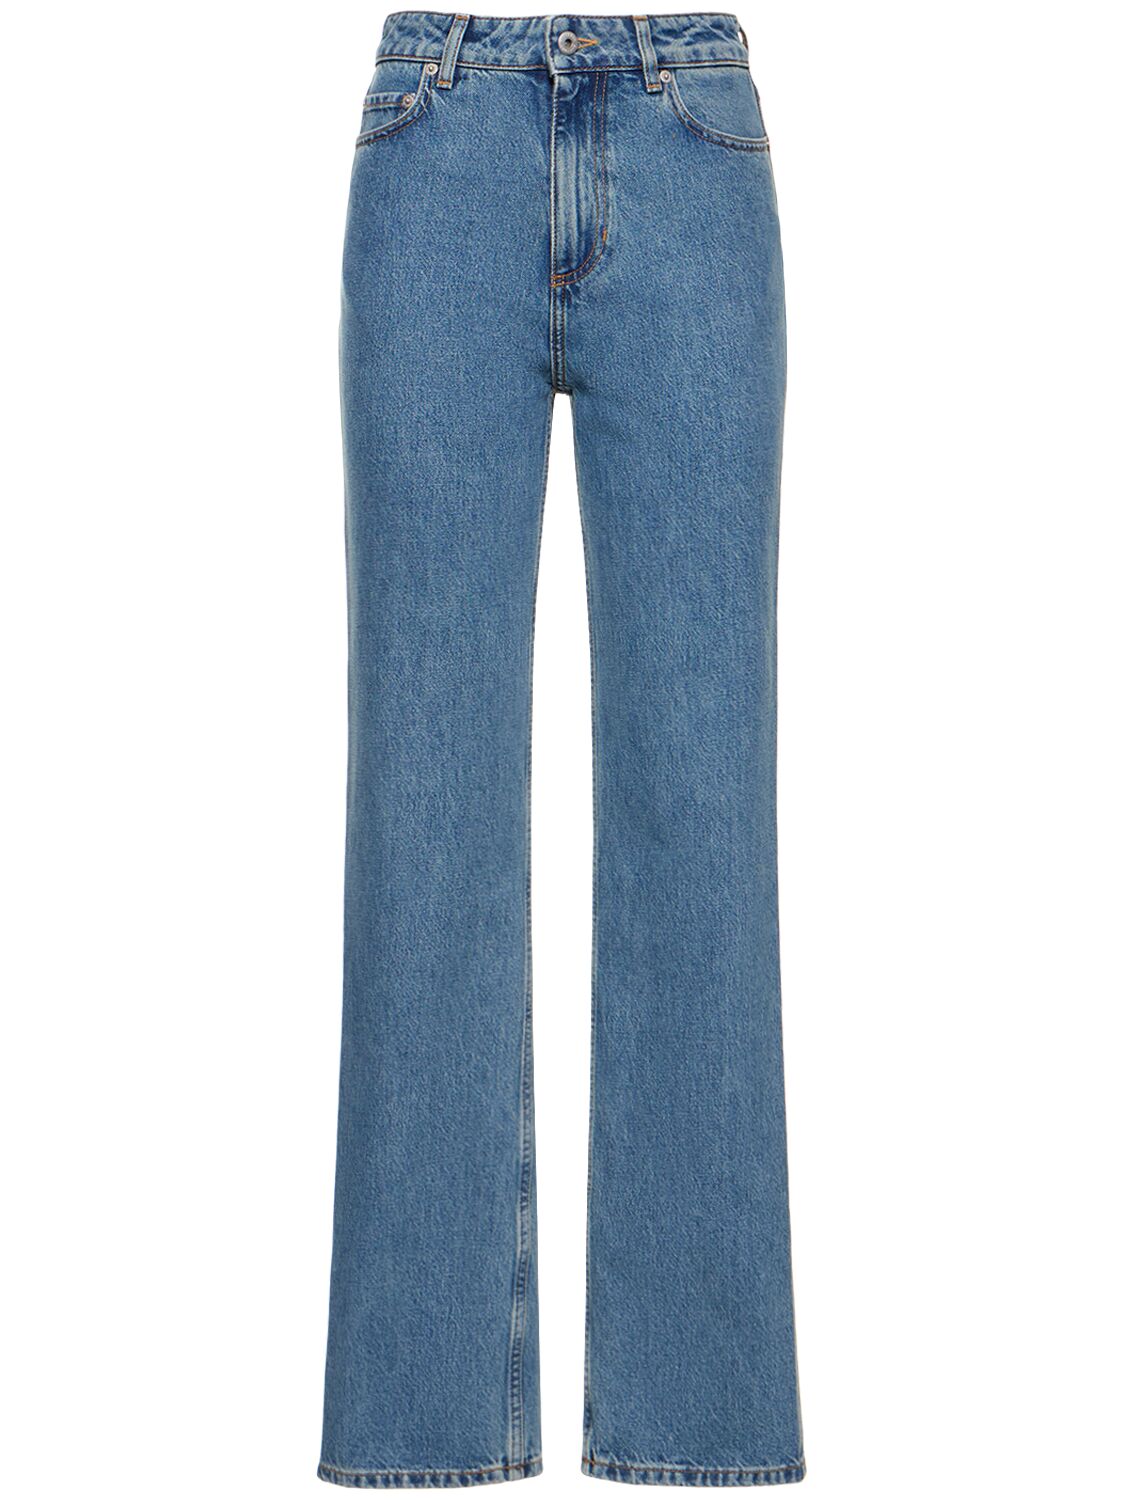 Image of Bergen High Rise Cotton Denim Jeans